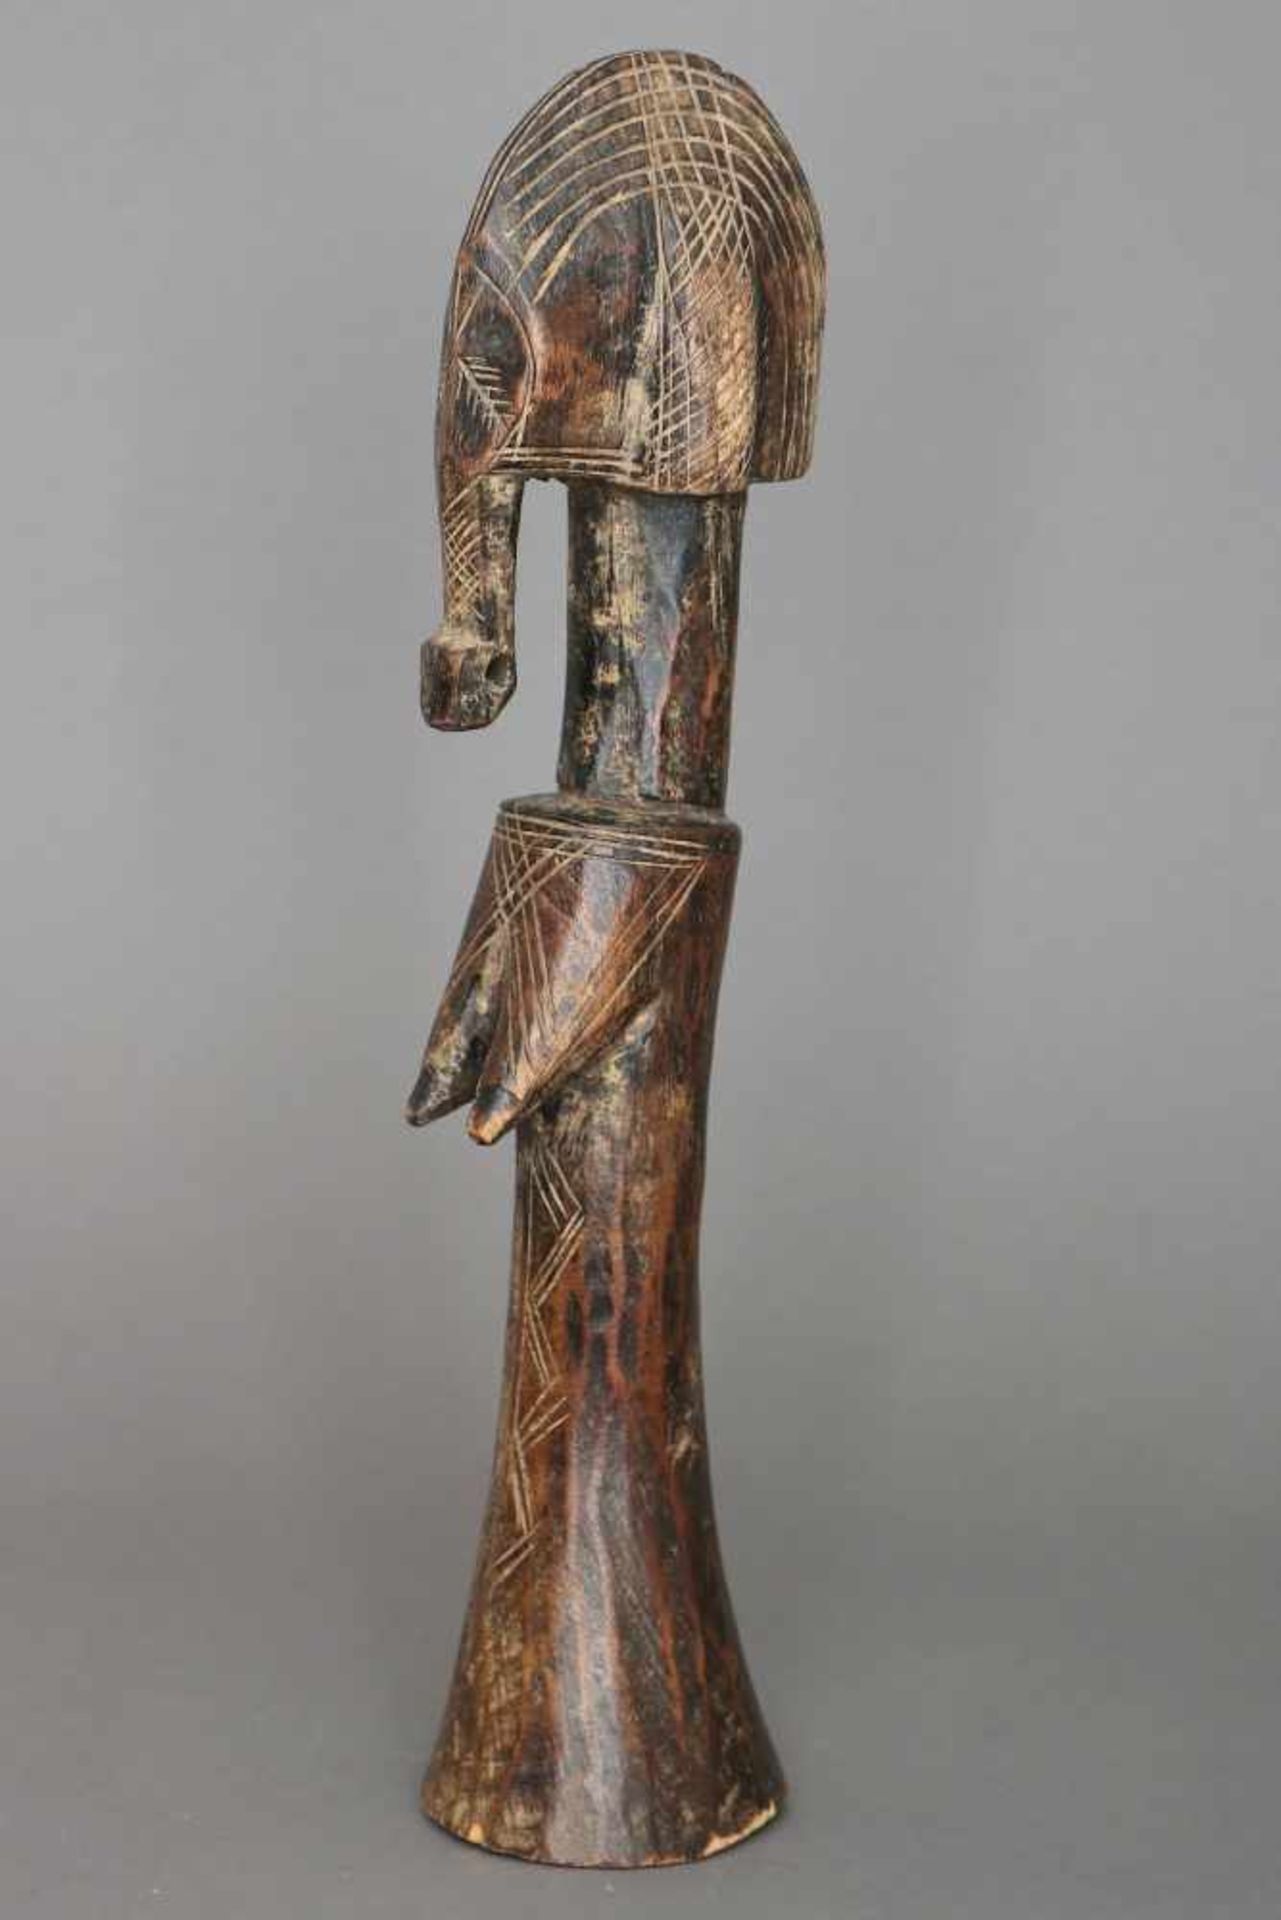 Afrikanische Ritualfigur der Mossi, Burkina FasoHolz, geschnitzt, stehende, zepterförmige,